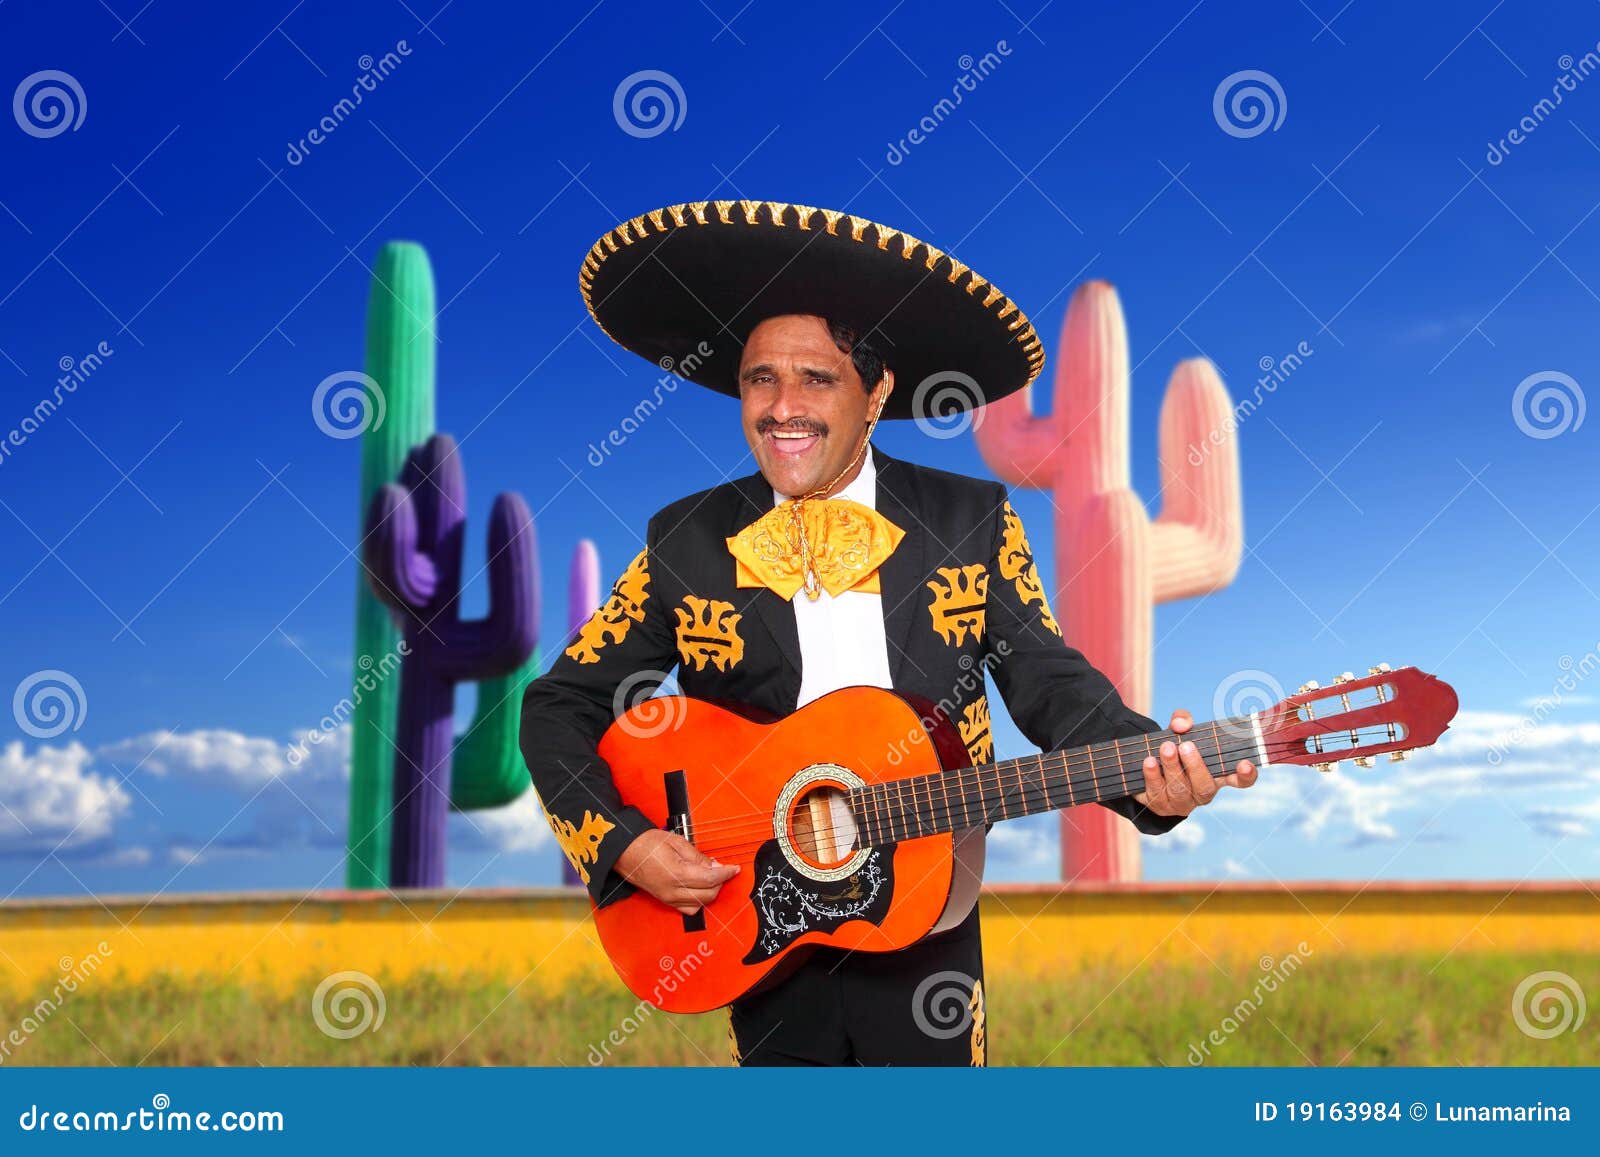 mexican mariachi charro playing guitar in cactus